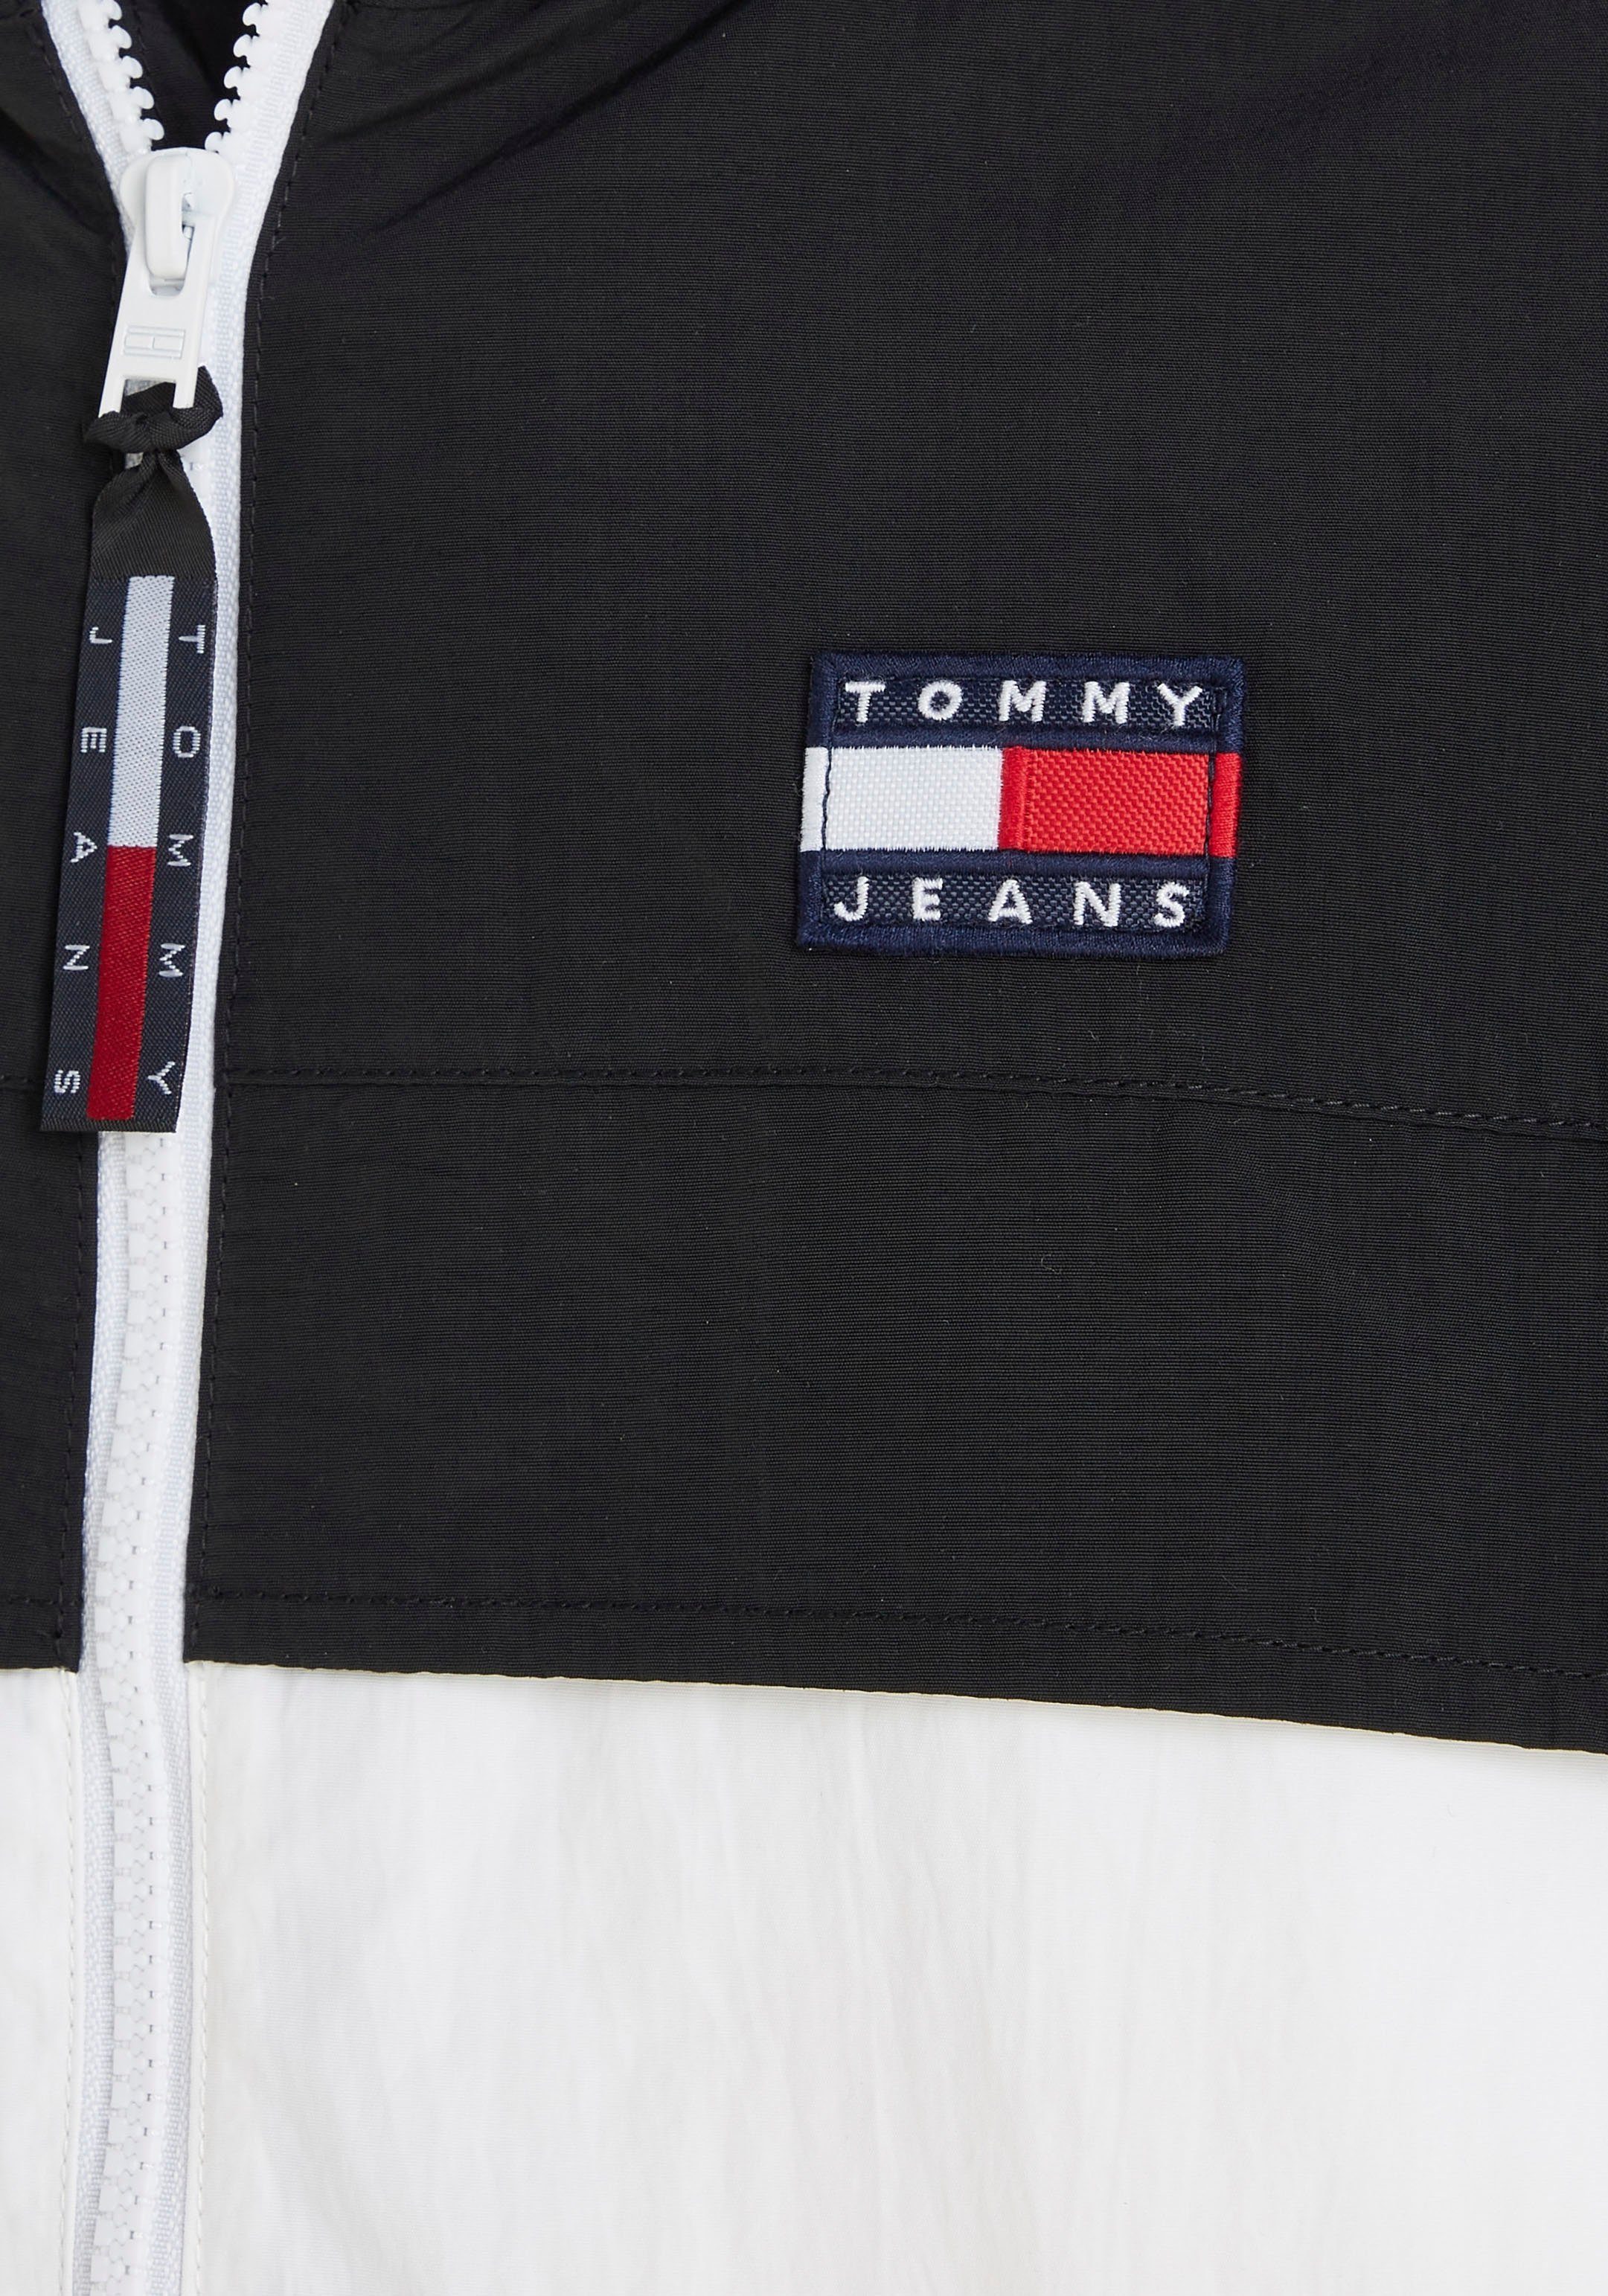 Windbreaker Tommy Design im Jeans colorblocking CHICAGO CLBK TJM Black/DeepCrimson/White WINDBREAKER